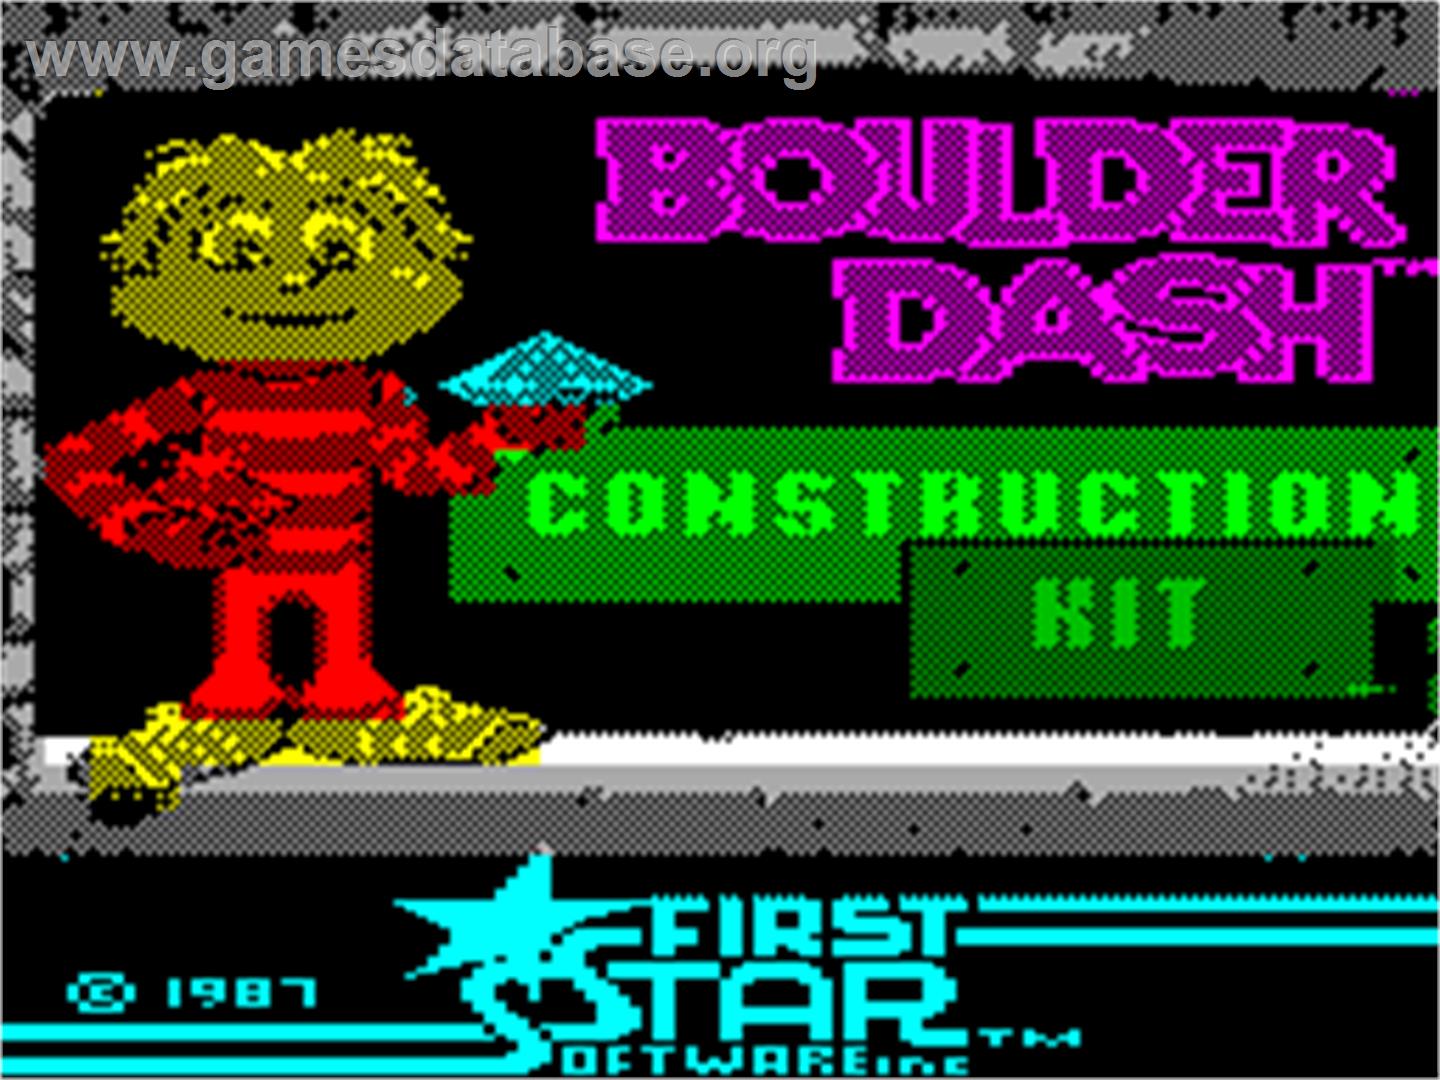 Boulder Dash Construction Kit - Sinclair ZX Spectrum - Artwork - Title Screen